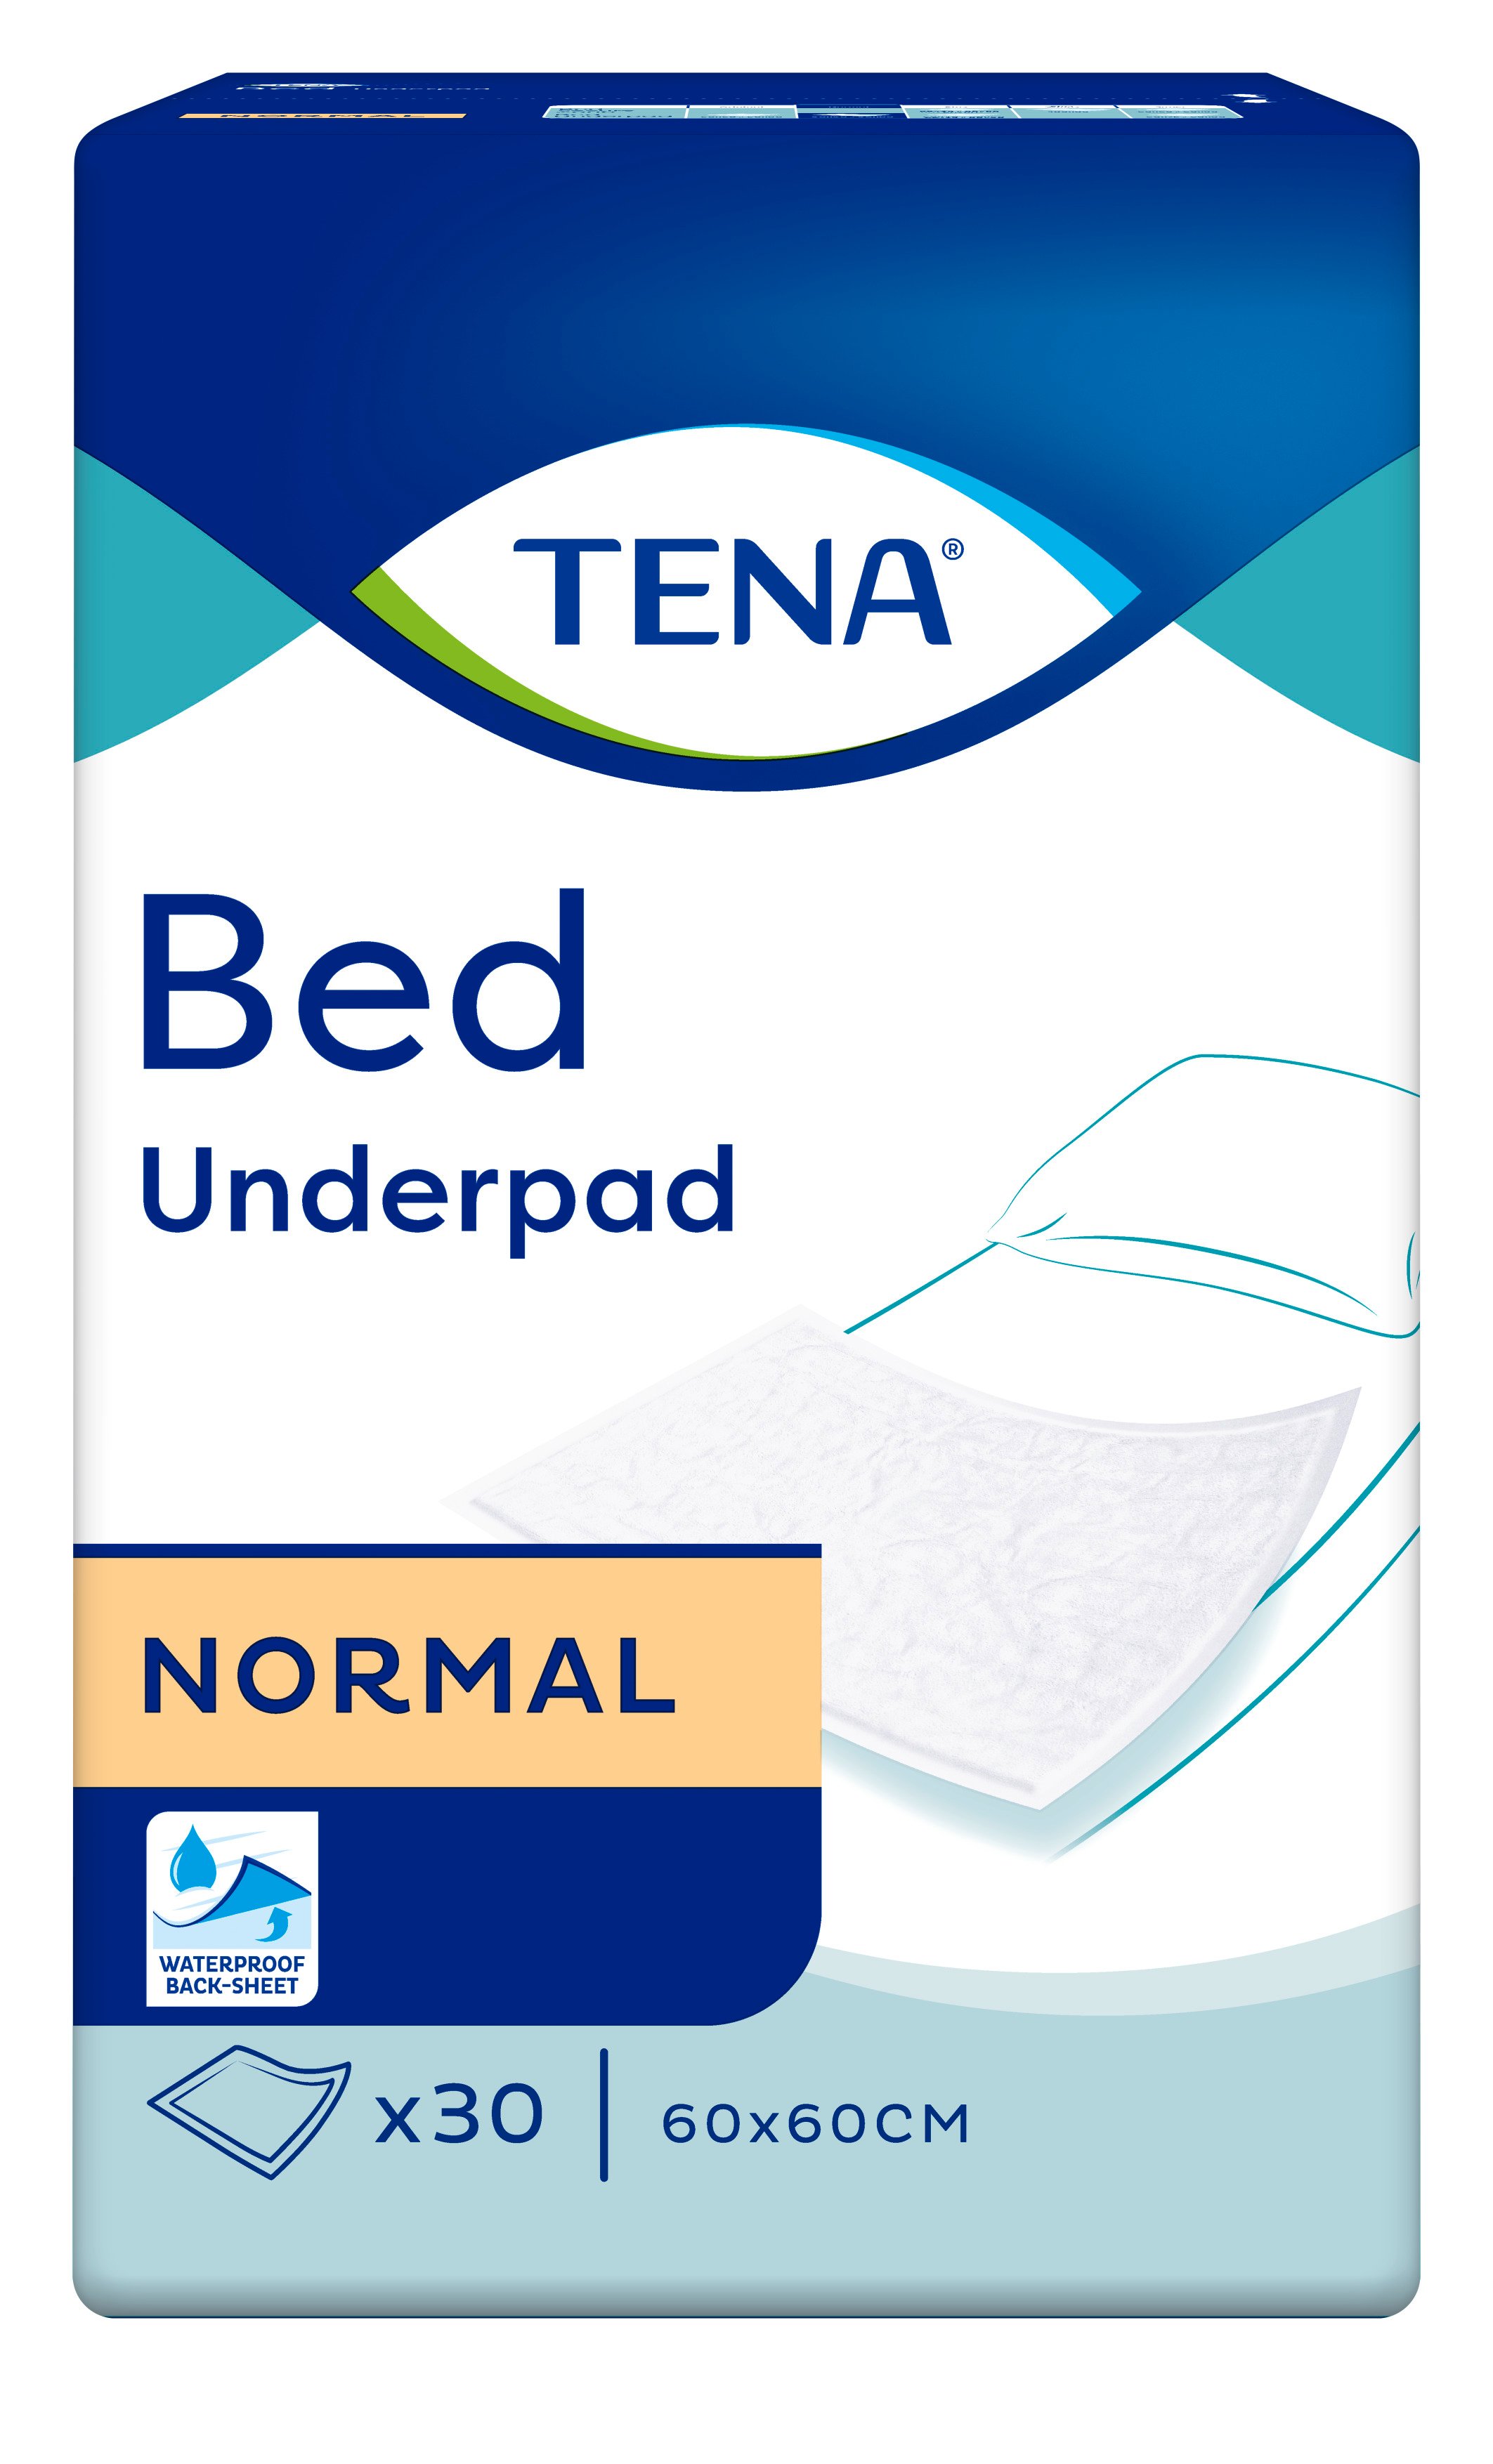 Одноразовые пеленки Tena Bed Normal, 60x60 см, 30 шт. - фото 2